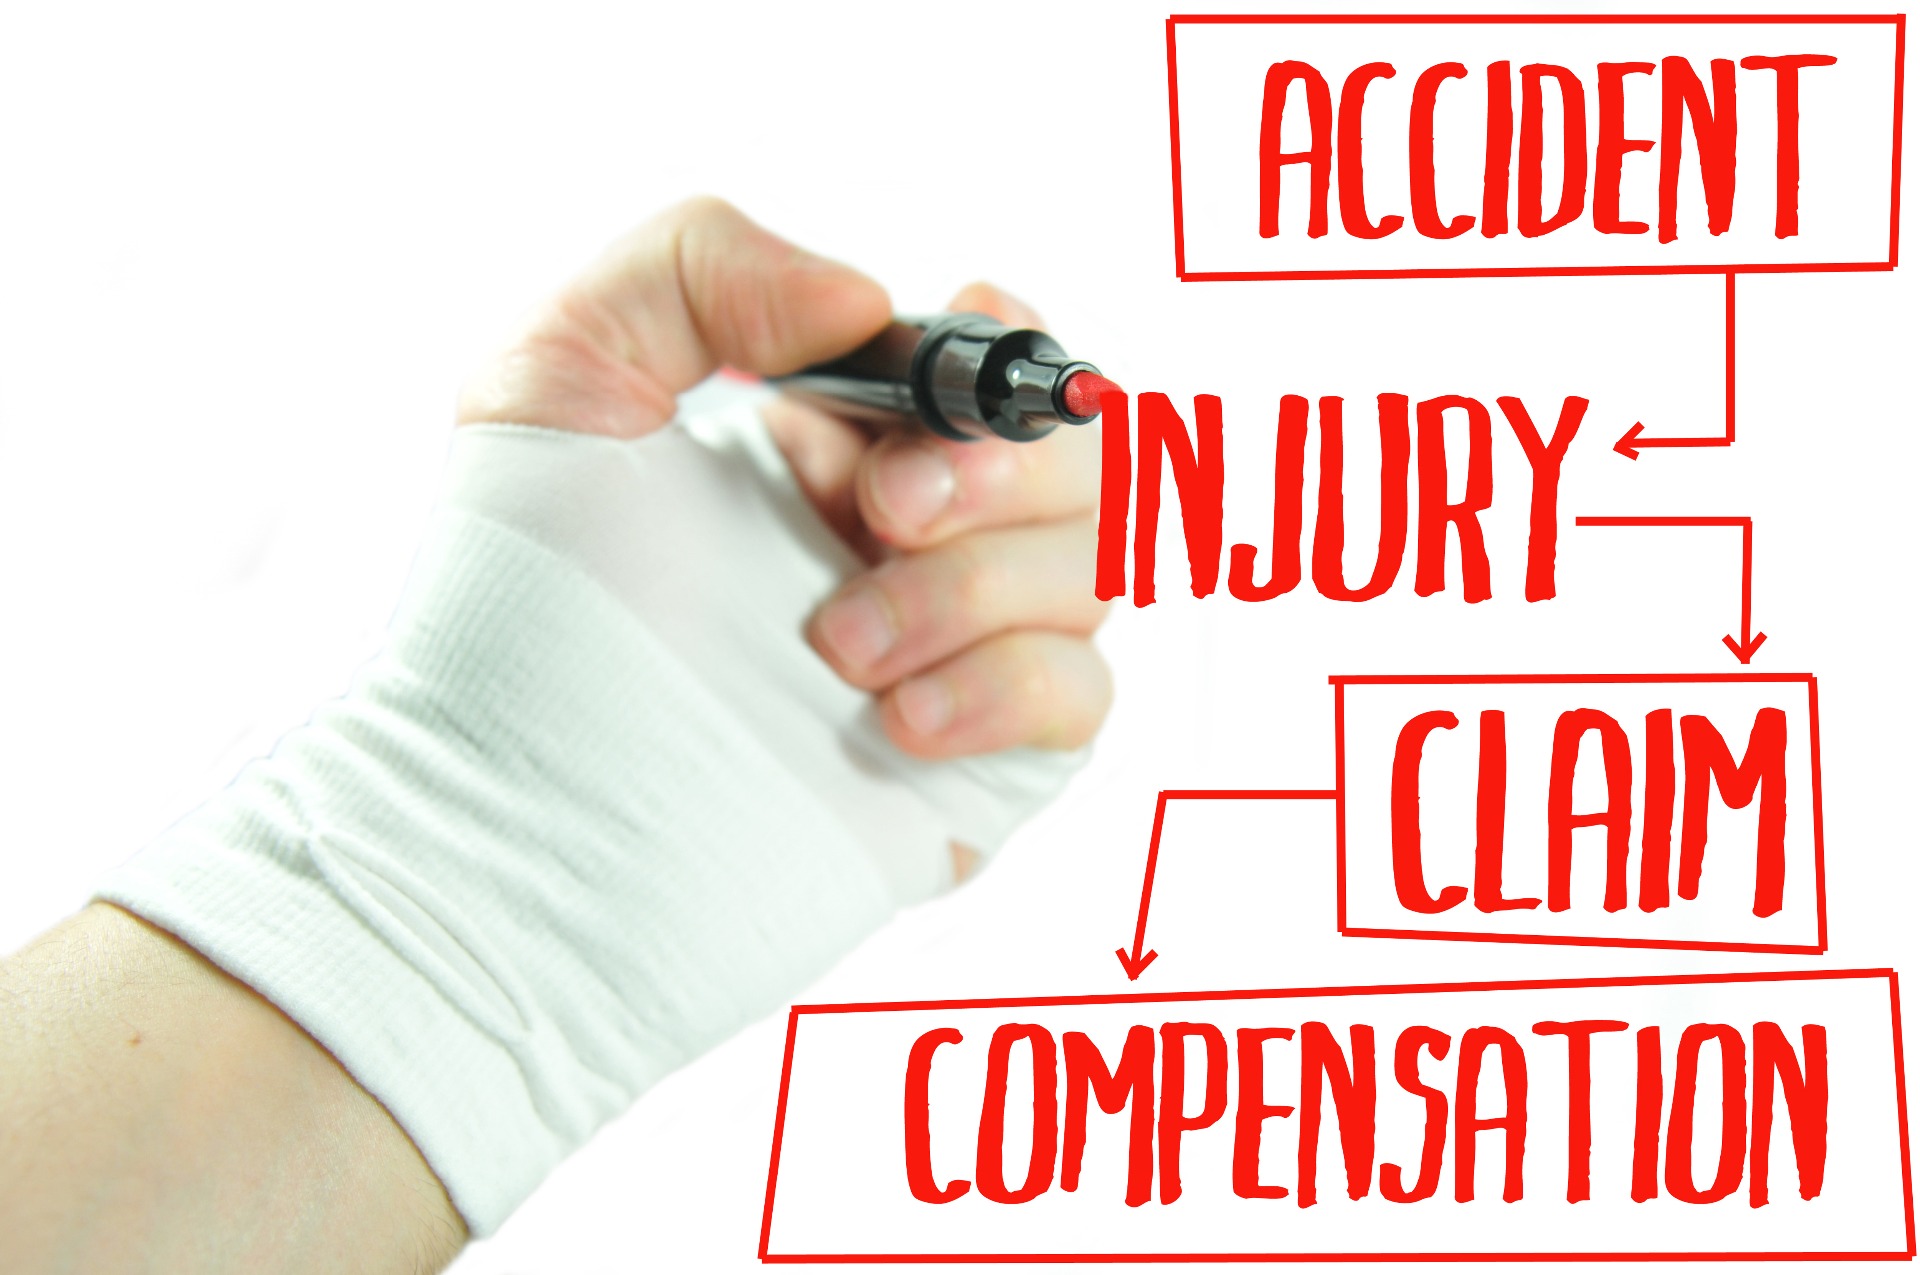 Accident -> injury -> claim -> compensation